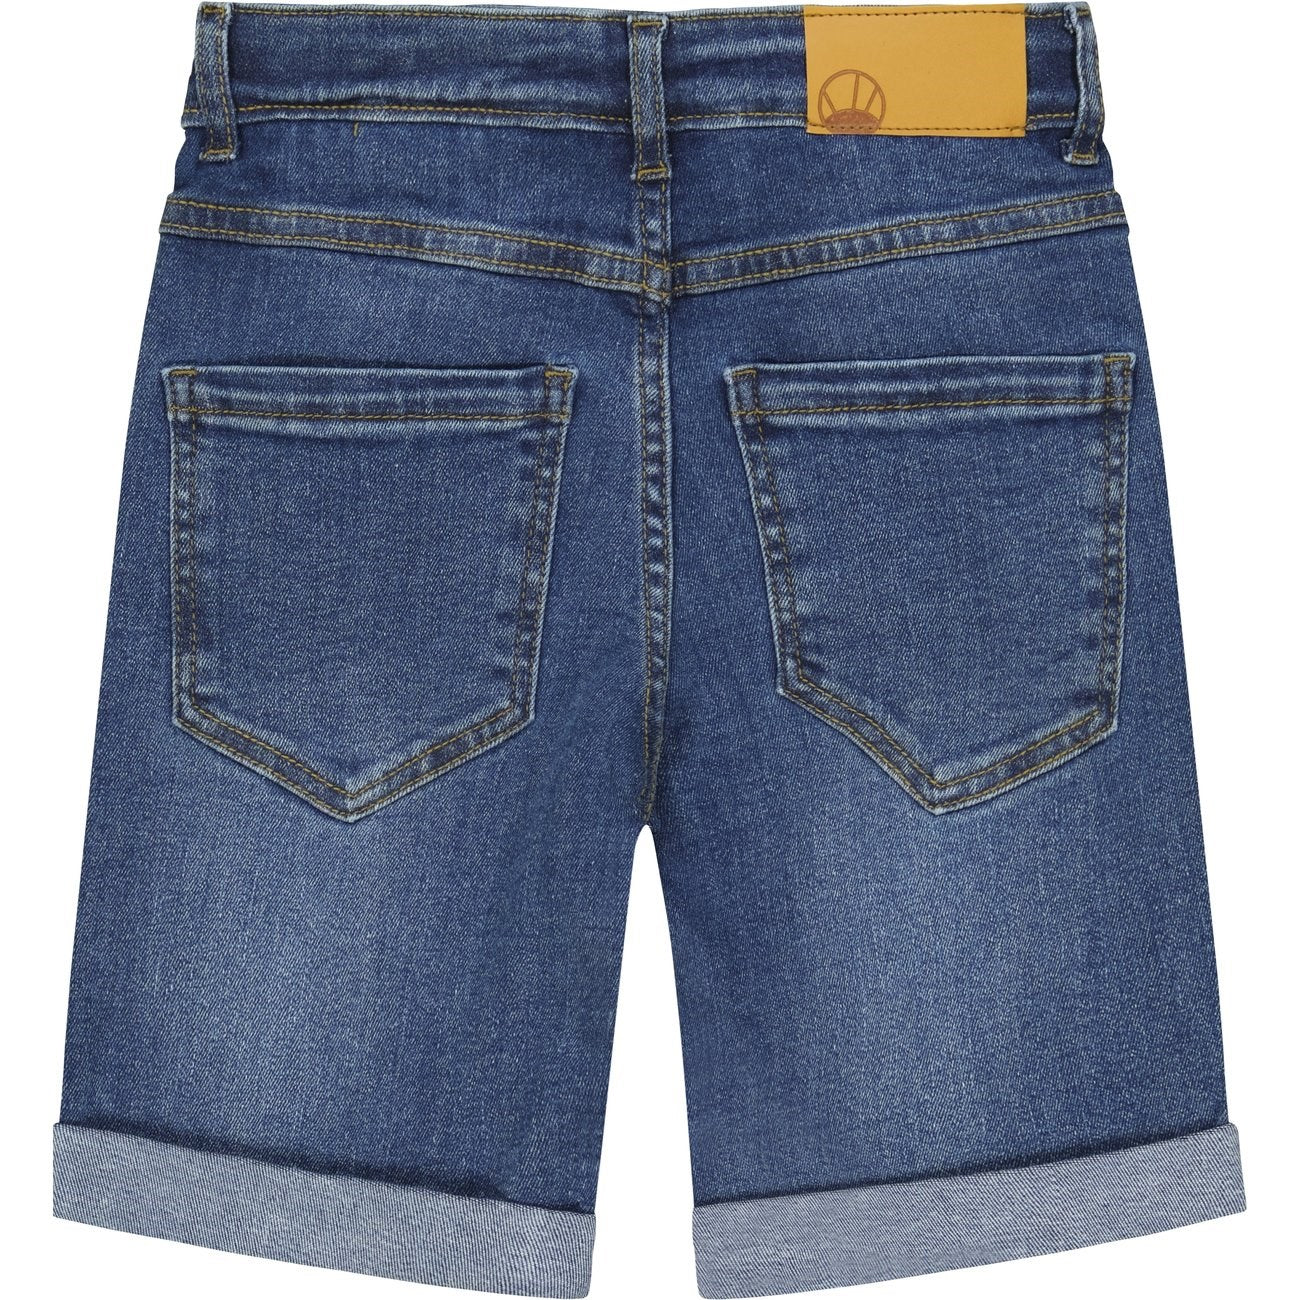 The New Medium blue Denim Shorts 5